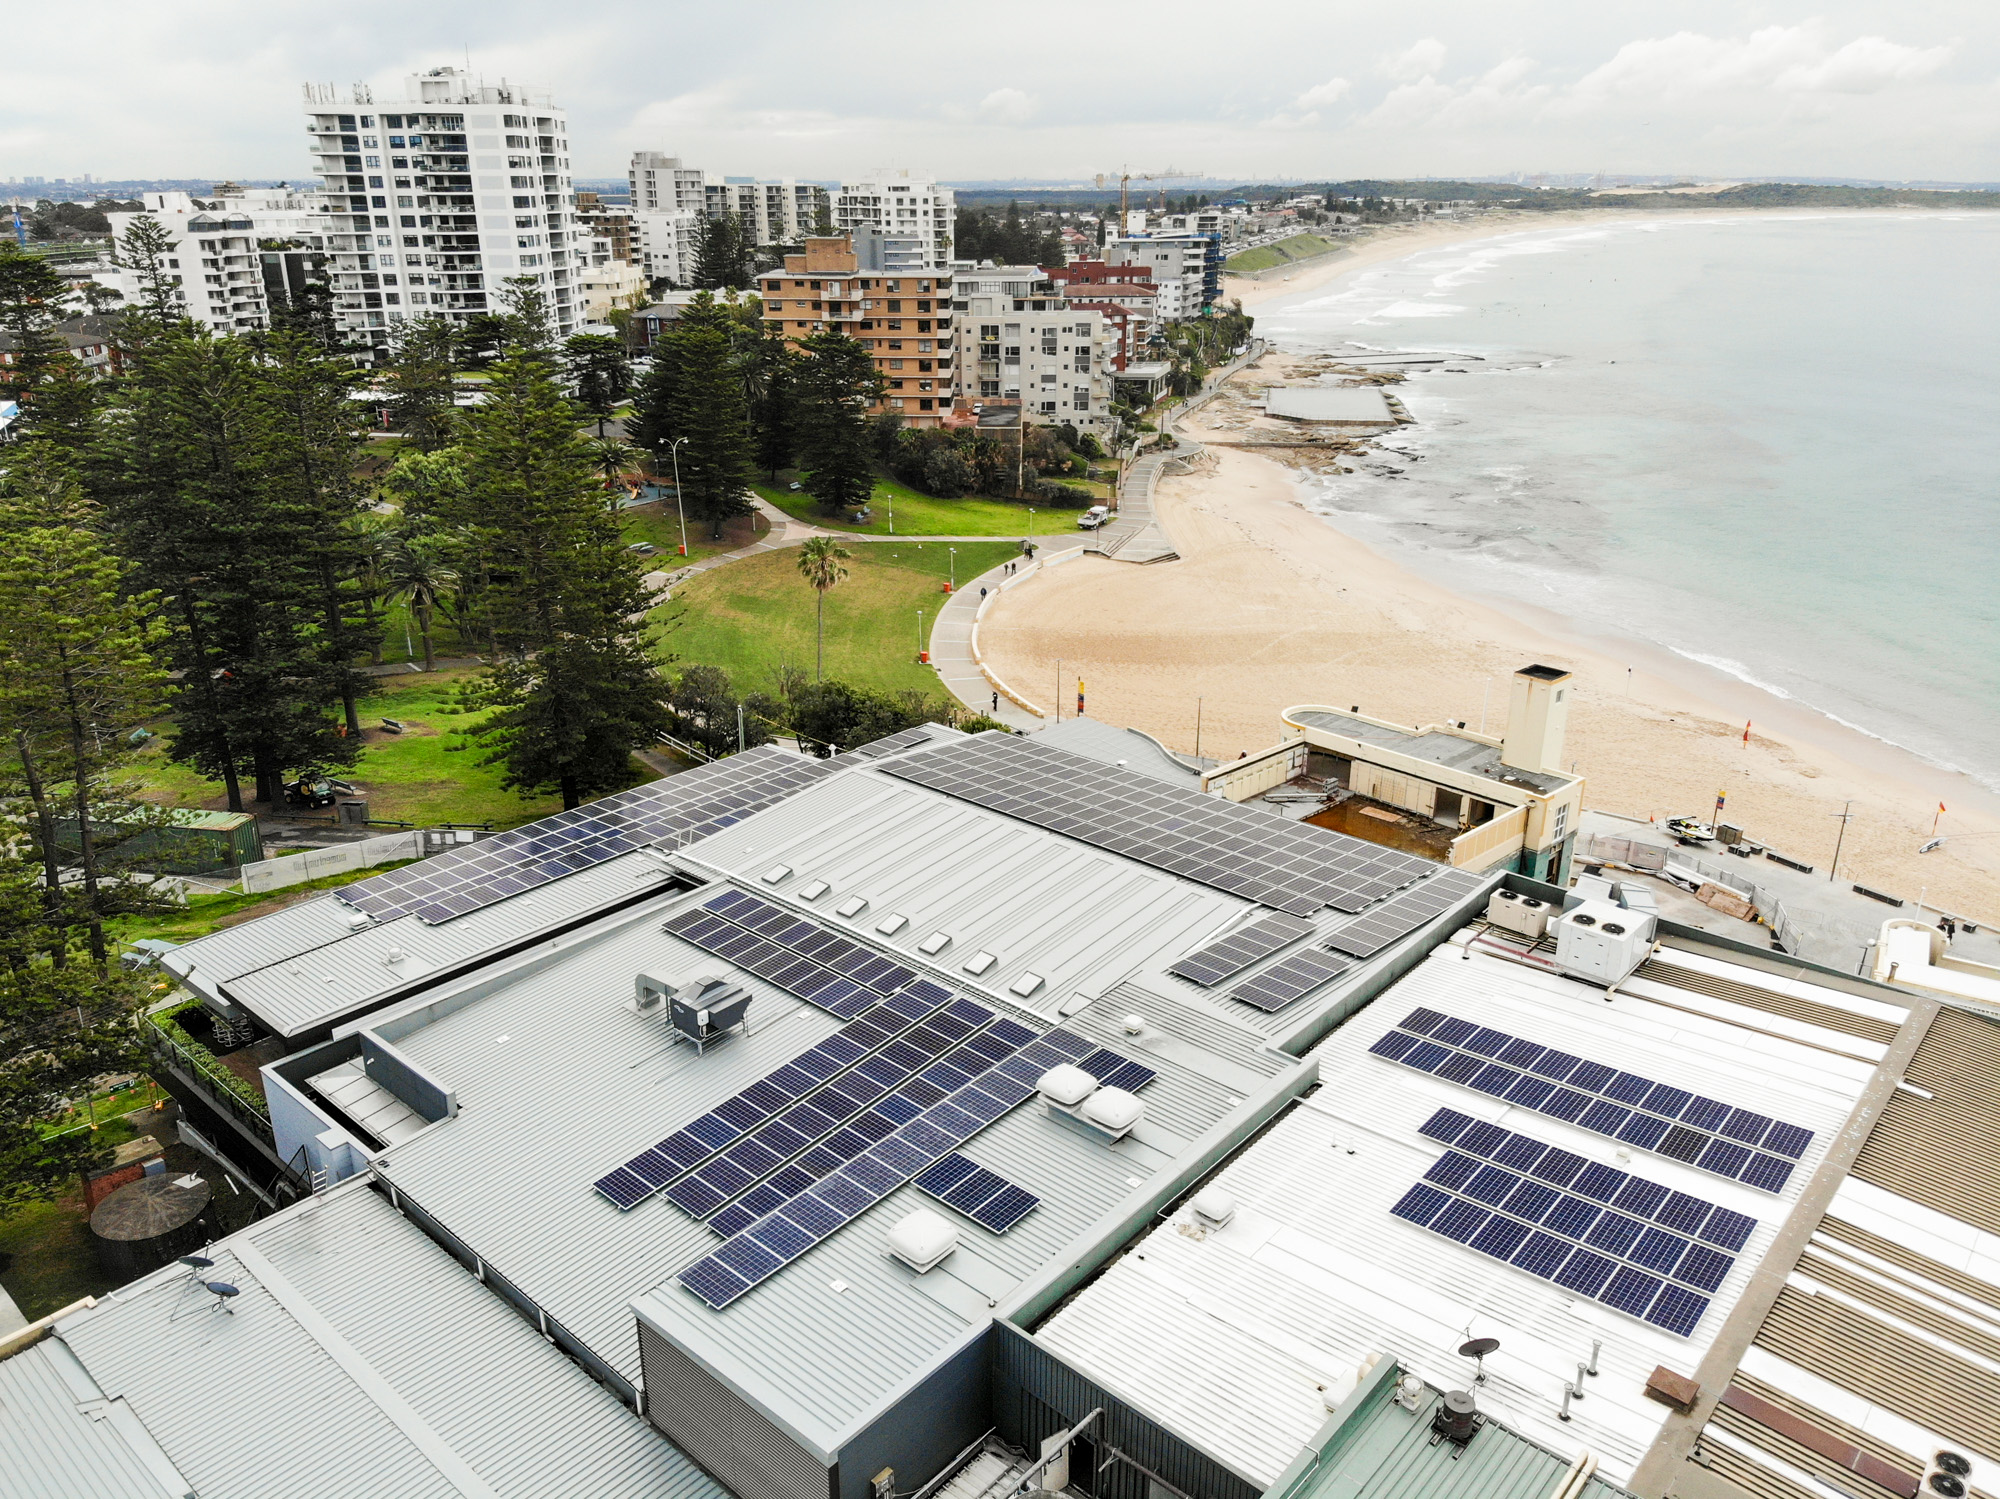 Solarbank 100kW Commercial Solar Install. Cronulla RSL, Sydney